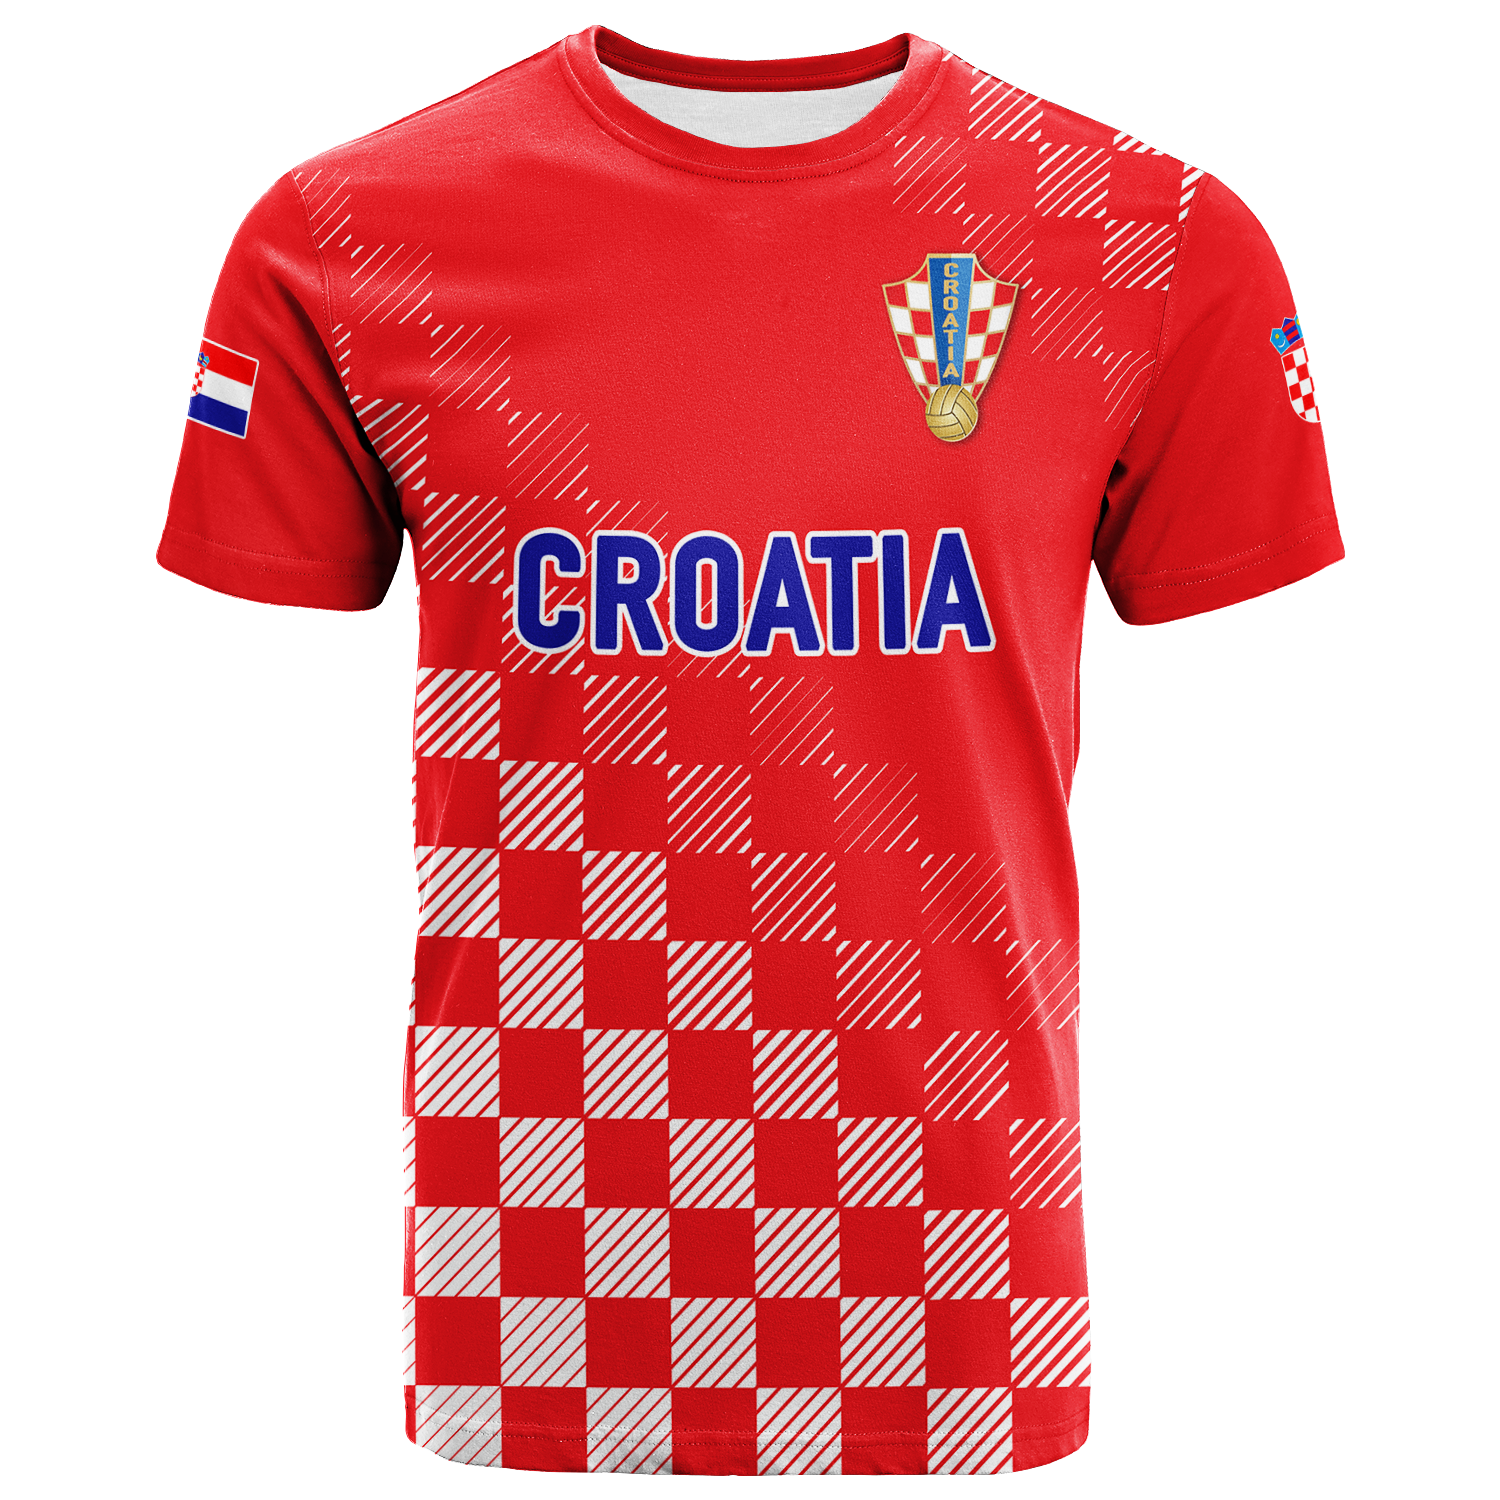 Croatia Football World Cup 2022 Champions Pride T-Shirt Red